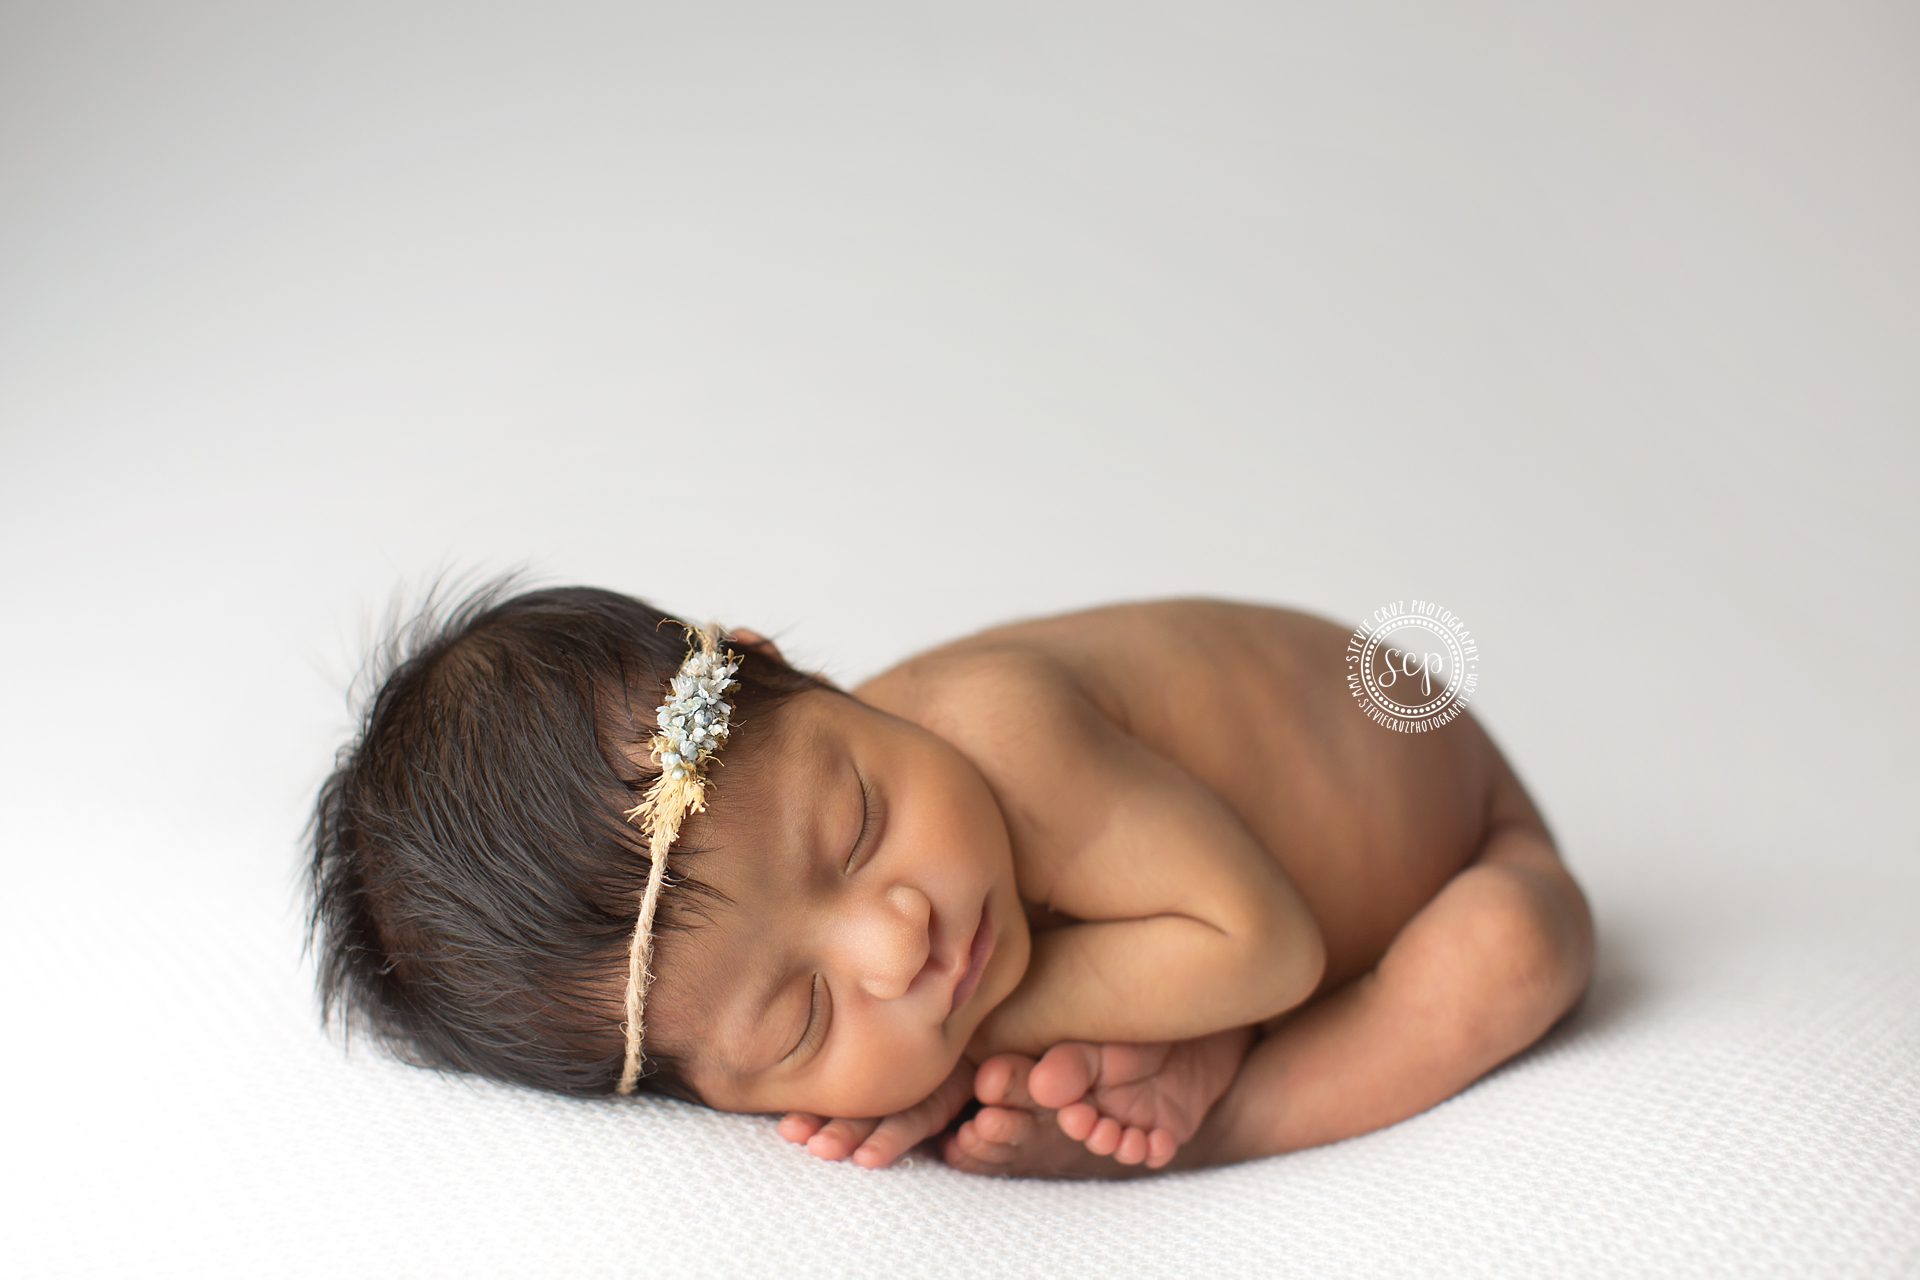 Souther California newborn photographer captures sleeping newborn baby girl. Love her hair accessory 